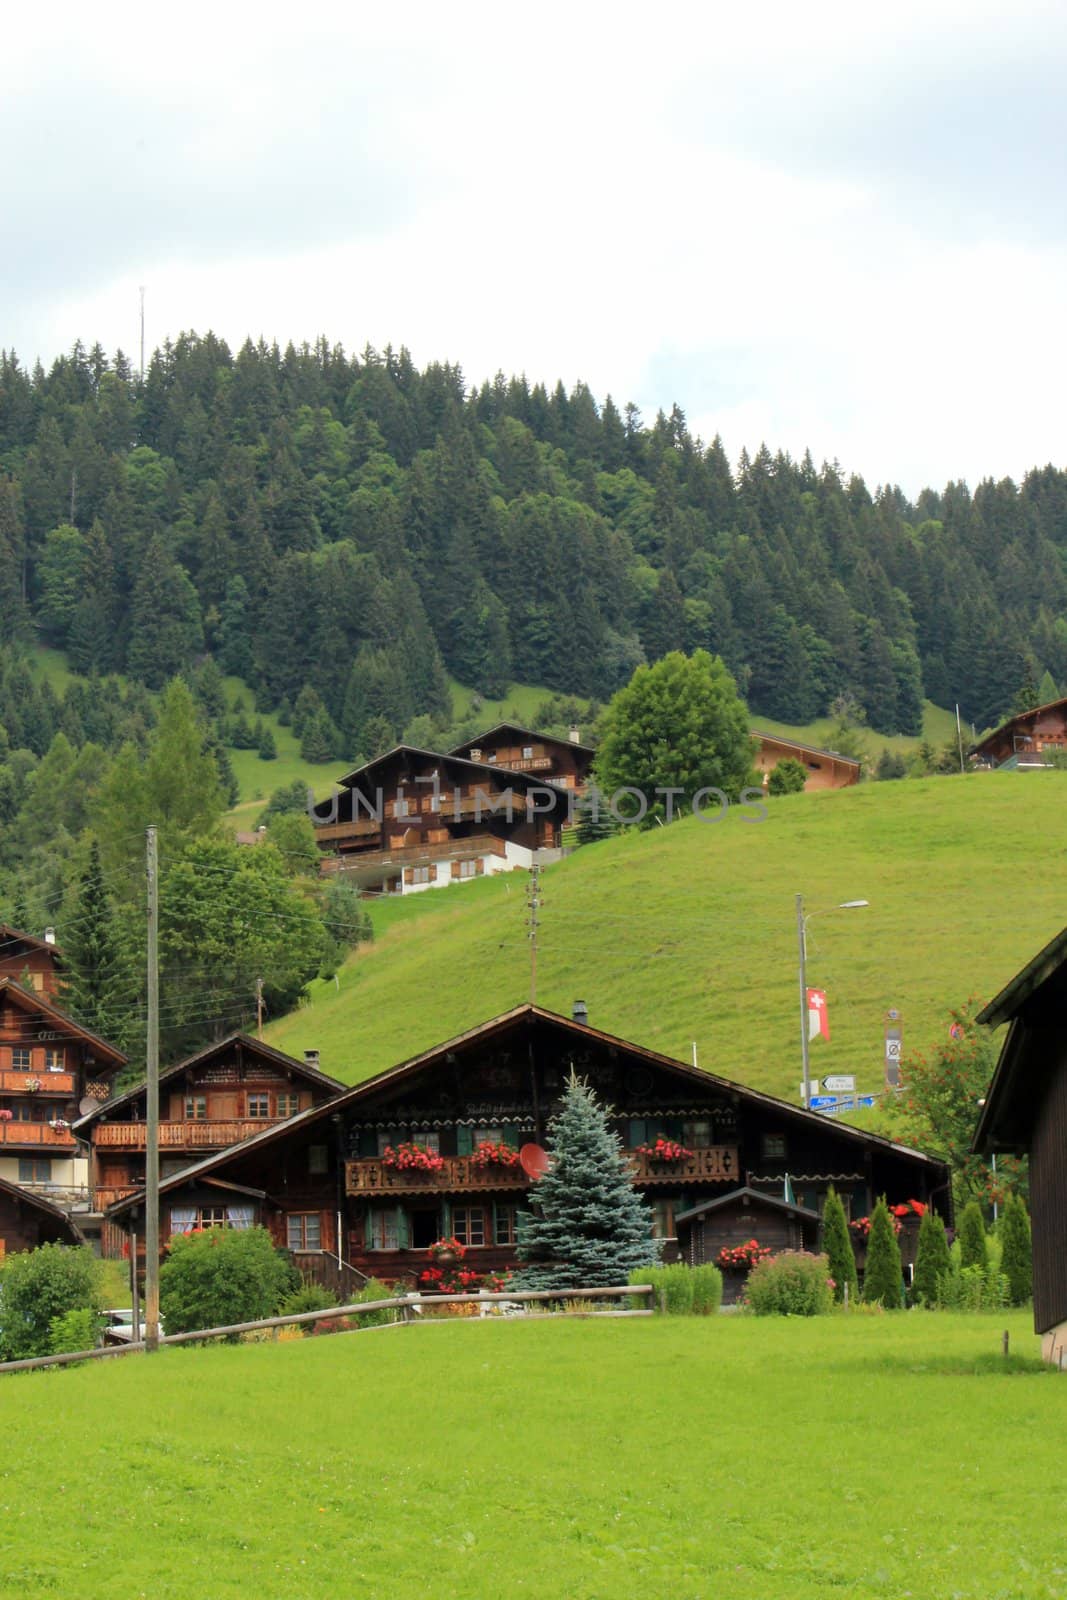 Chalets at Diablerets village, Switzerland by Elenaphotos21